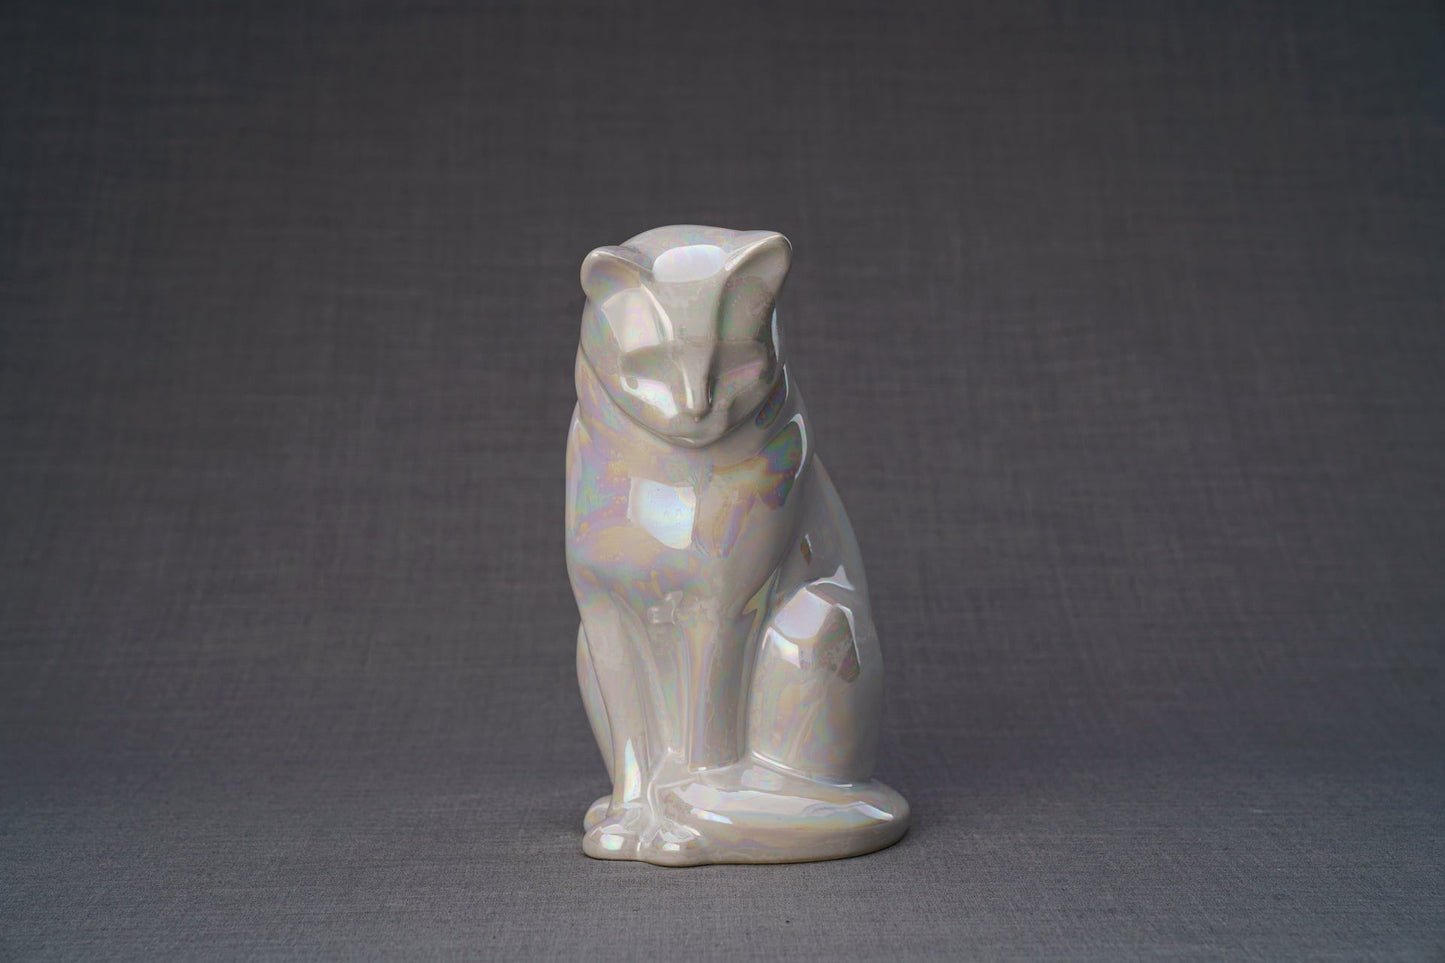 Pulvis Art Urns Pet Urn Neko Pet Urn for Ashes - Pearl White | Ceramic | Handmade